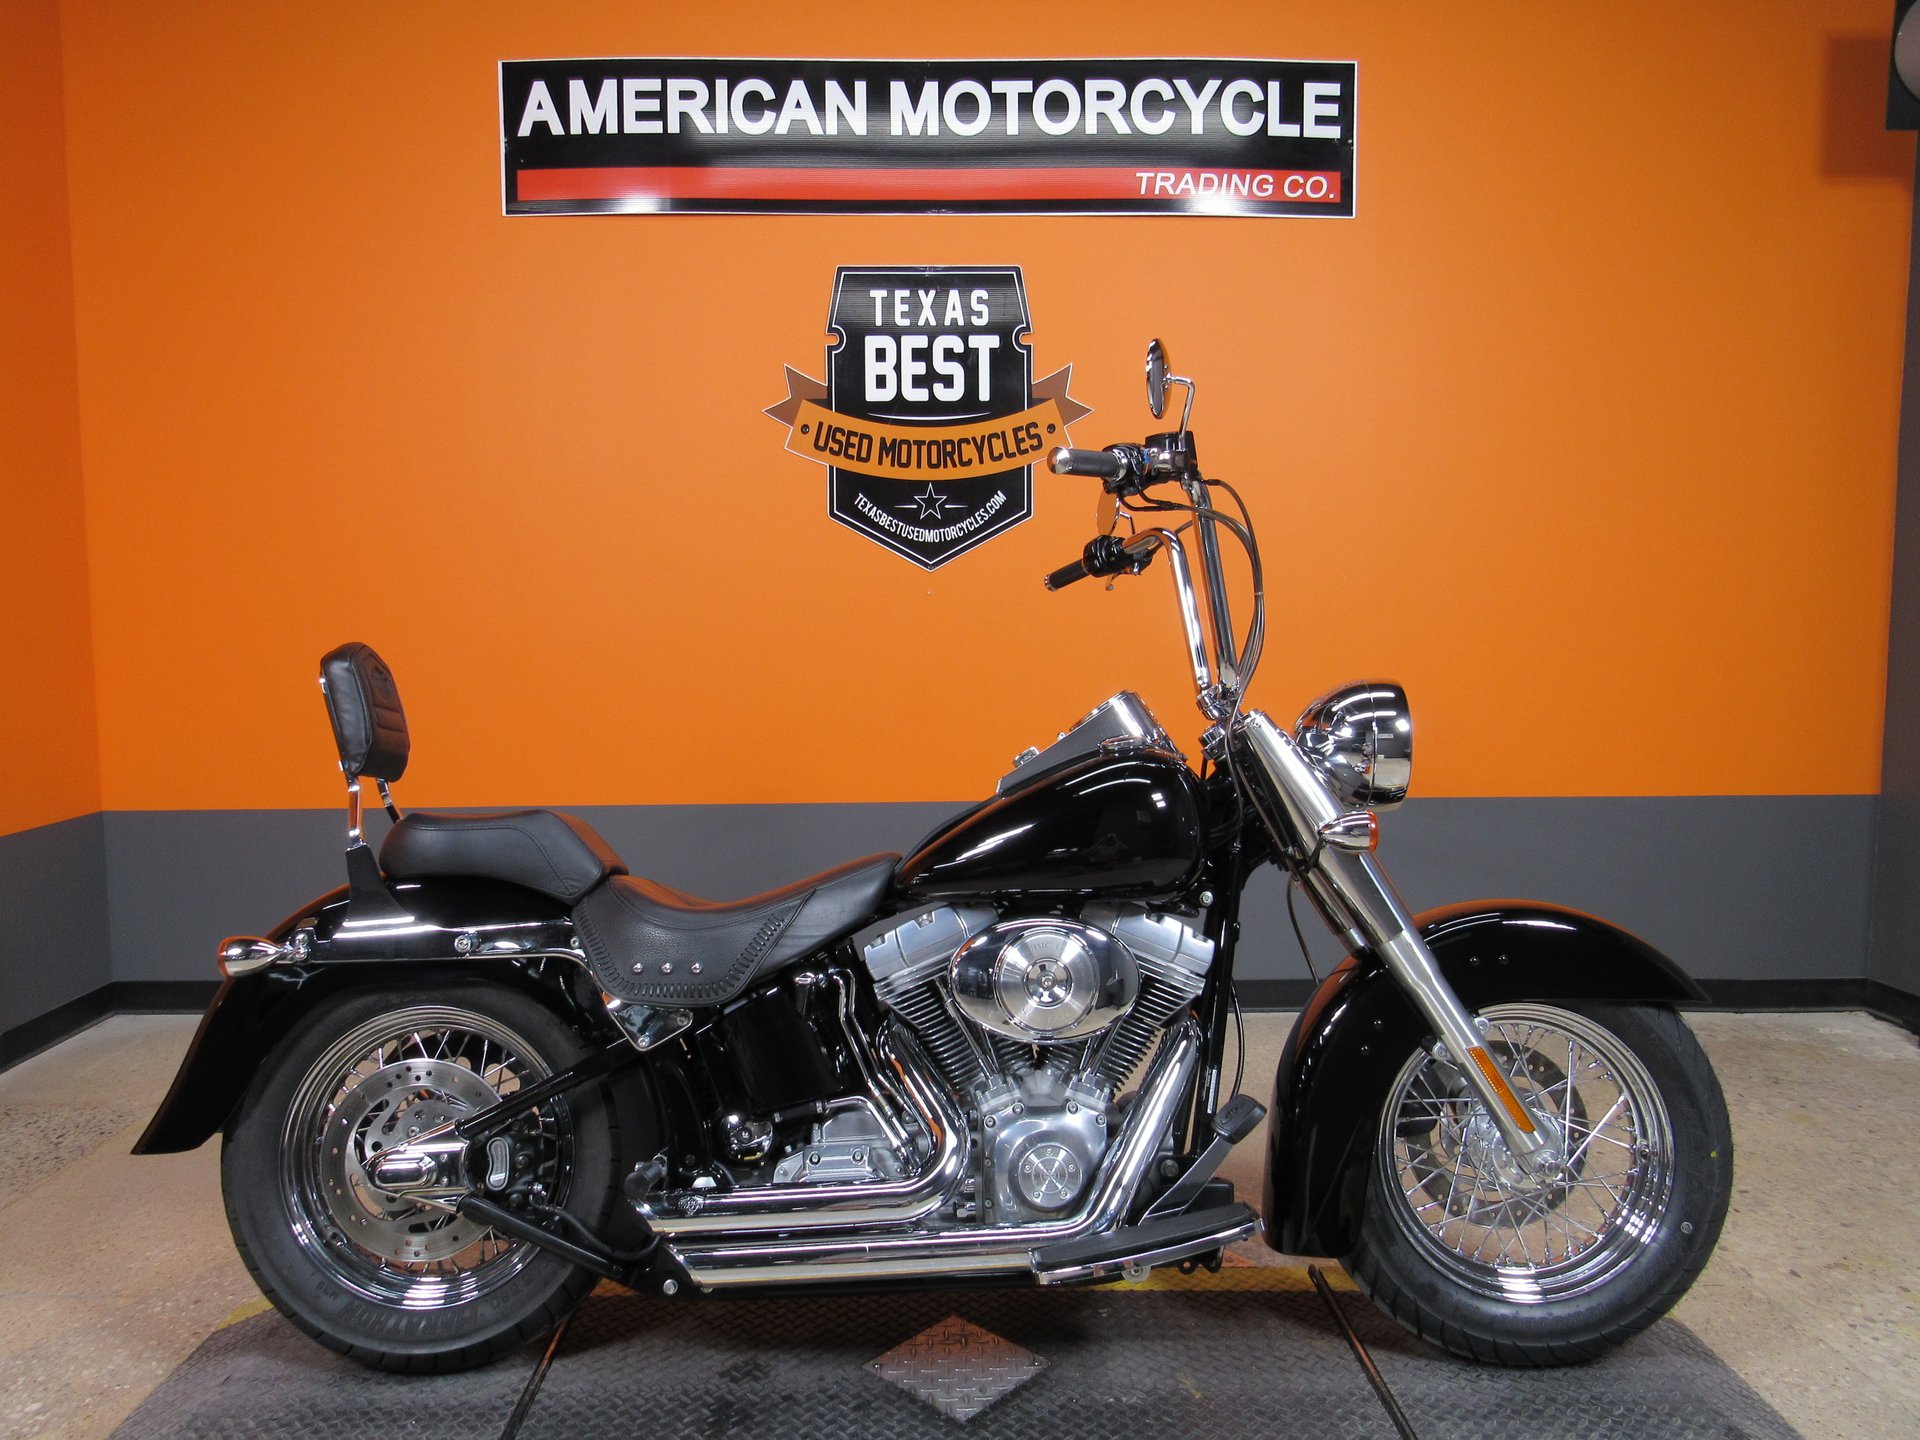 2006 Harley-Davidson Softail Heritage | American Motorcycle Trading Company  - Used Harley Davidson Motorcycles